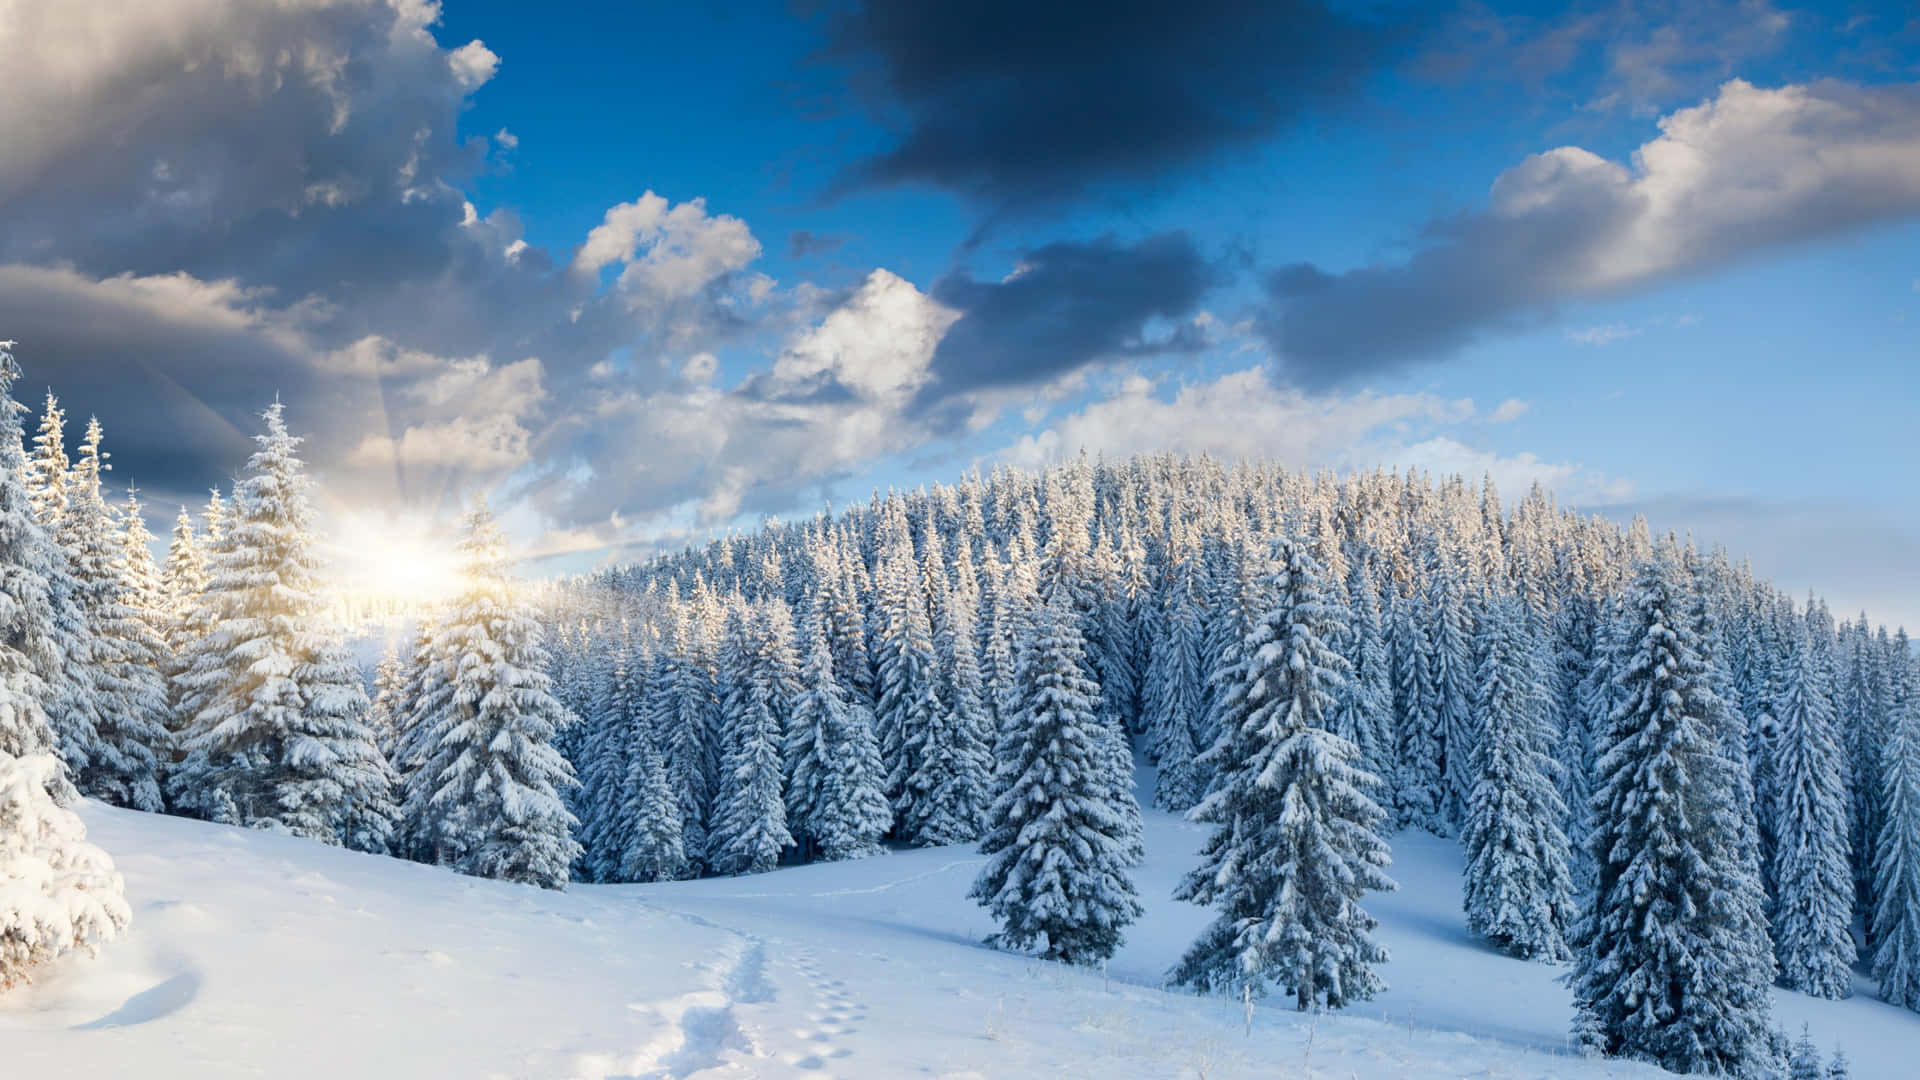 A peaceful winter forest scene